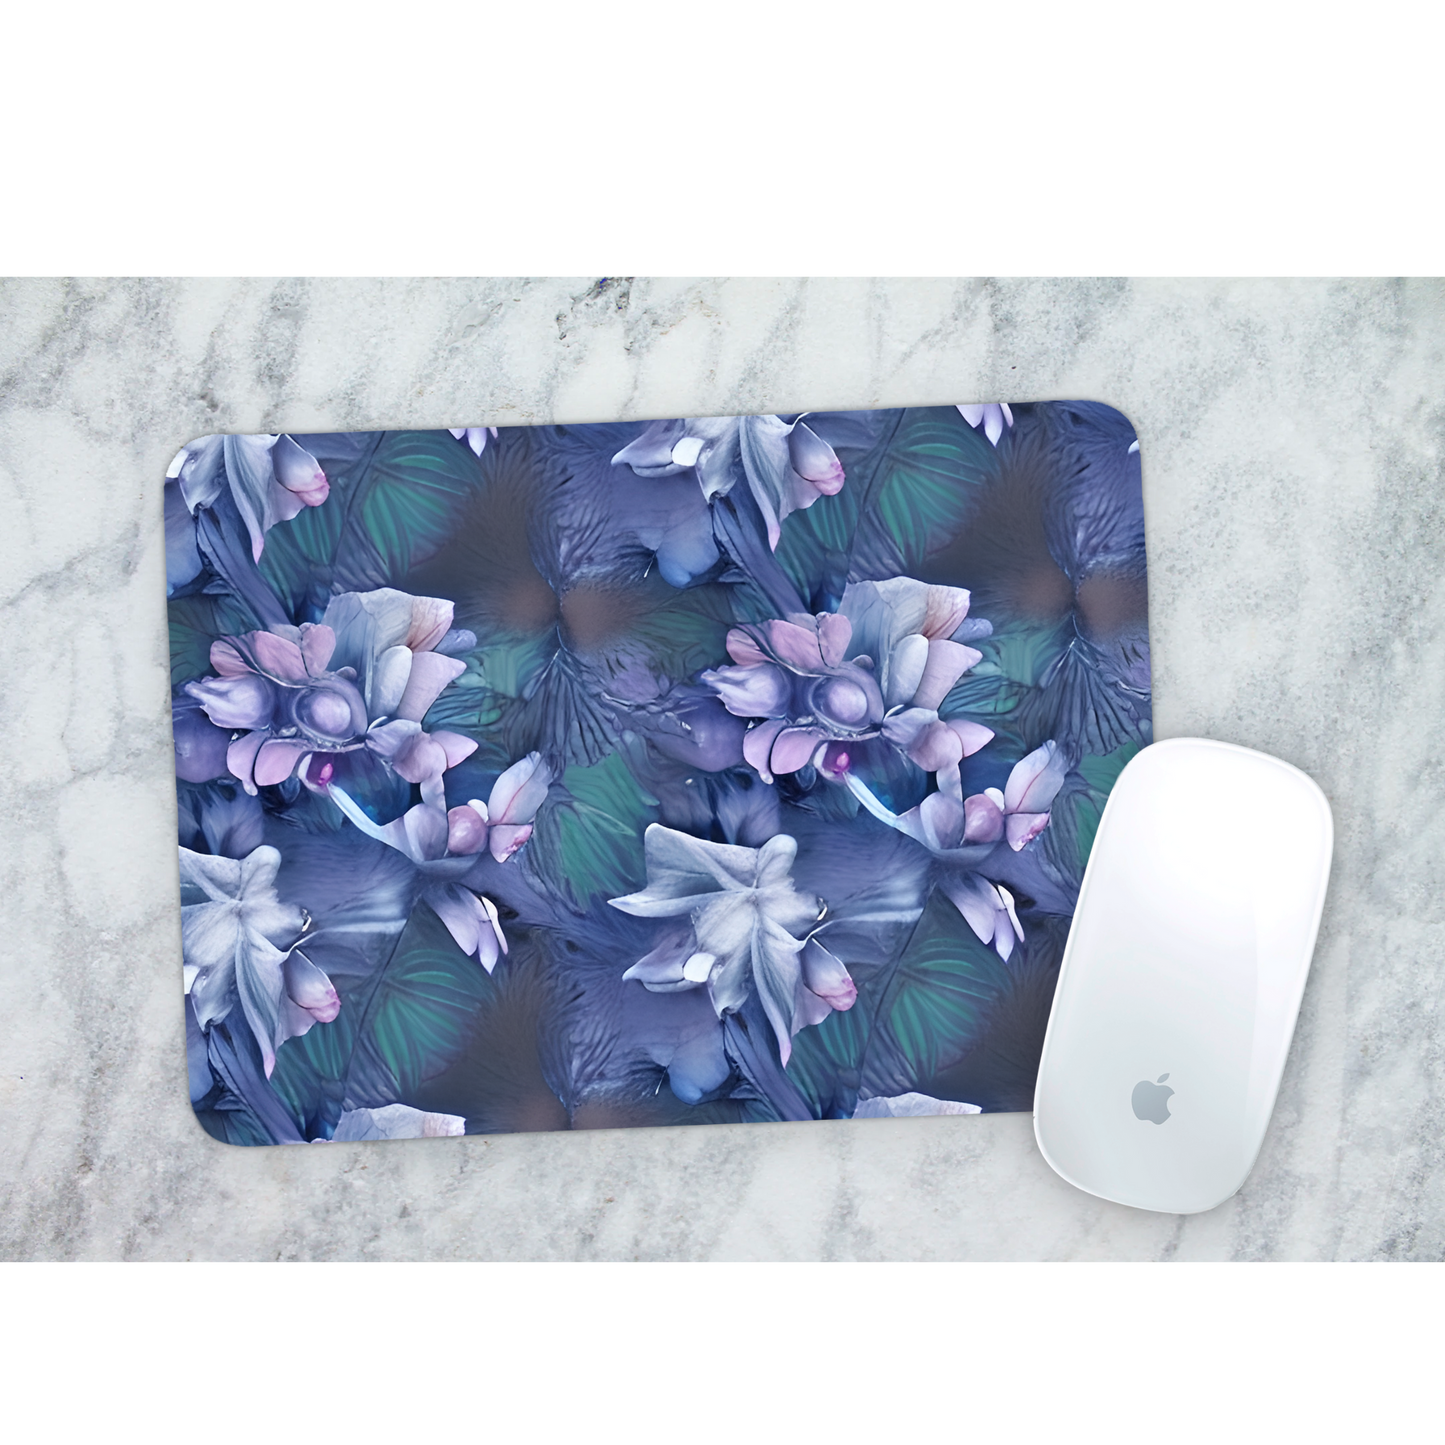 Premium Printed Anti-Slip Mouse Mat - Ultra Durable 3D Moody Indigo Flowers Design